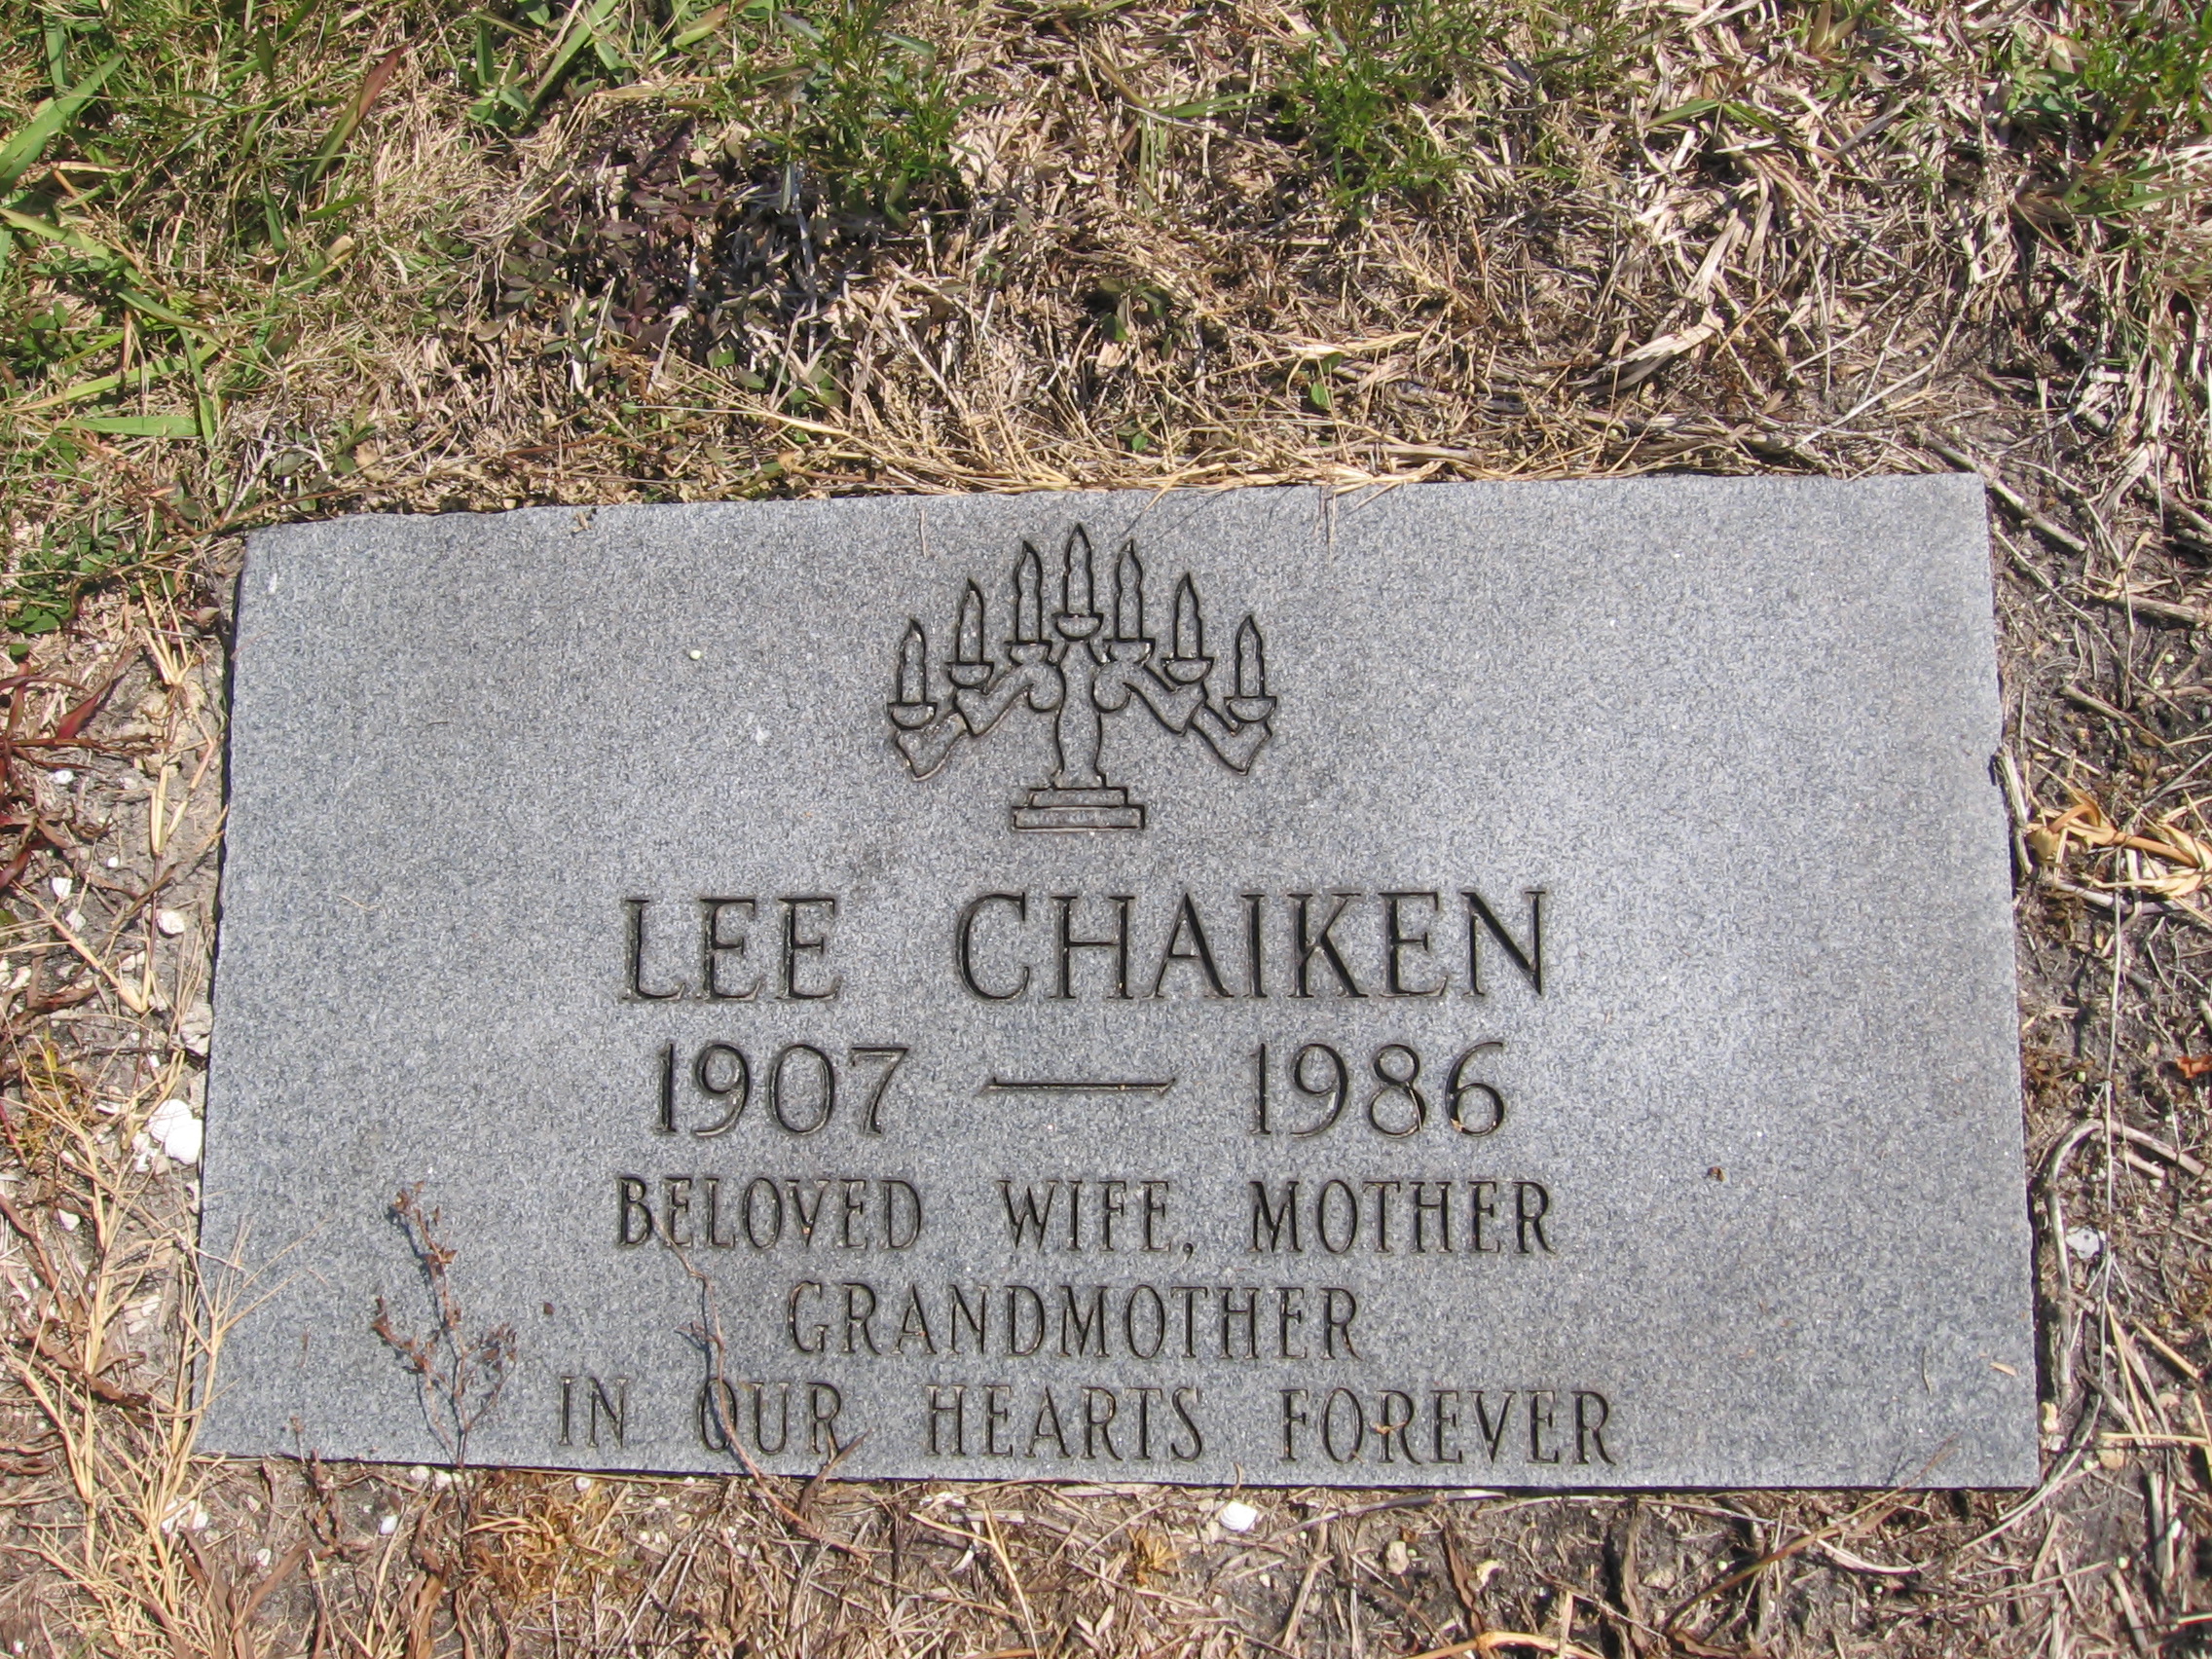 Lee Chaiken